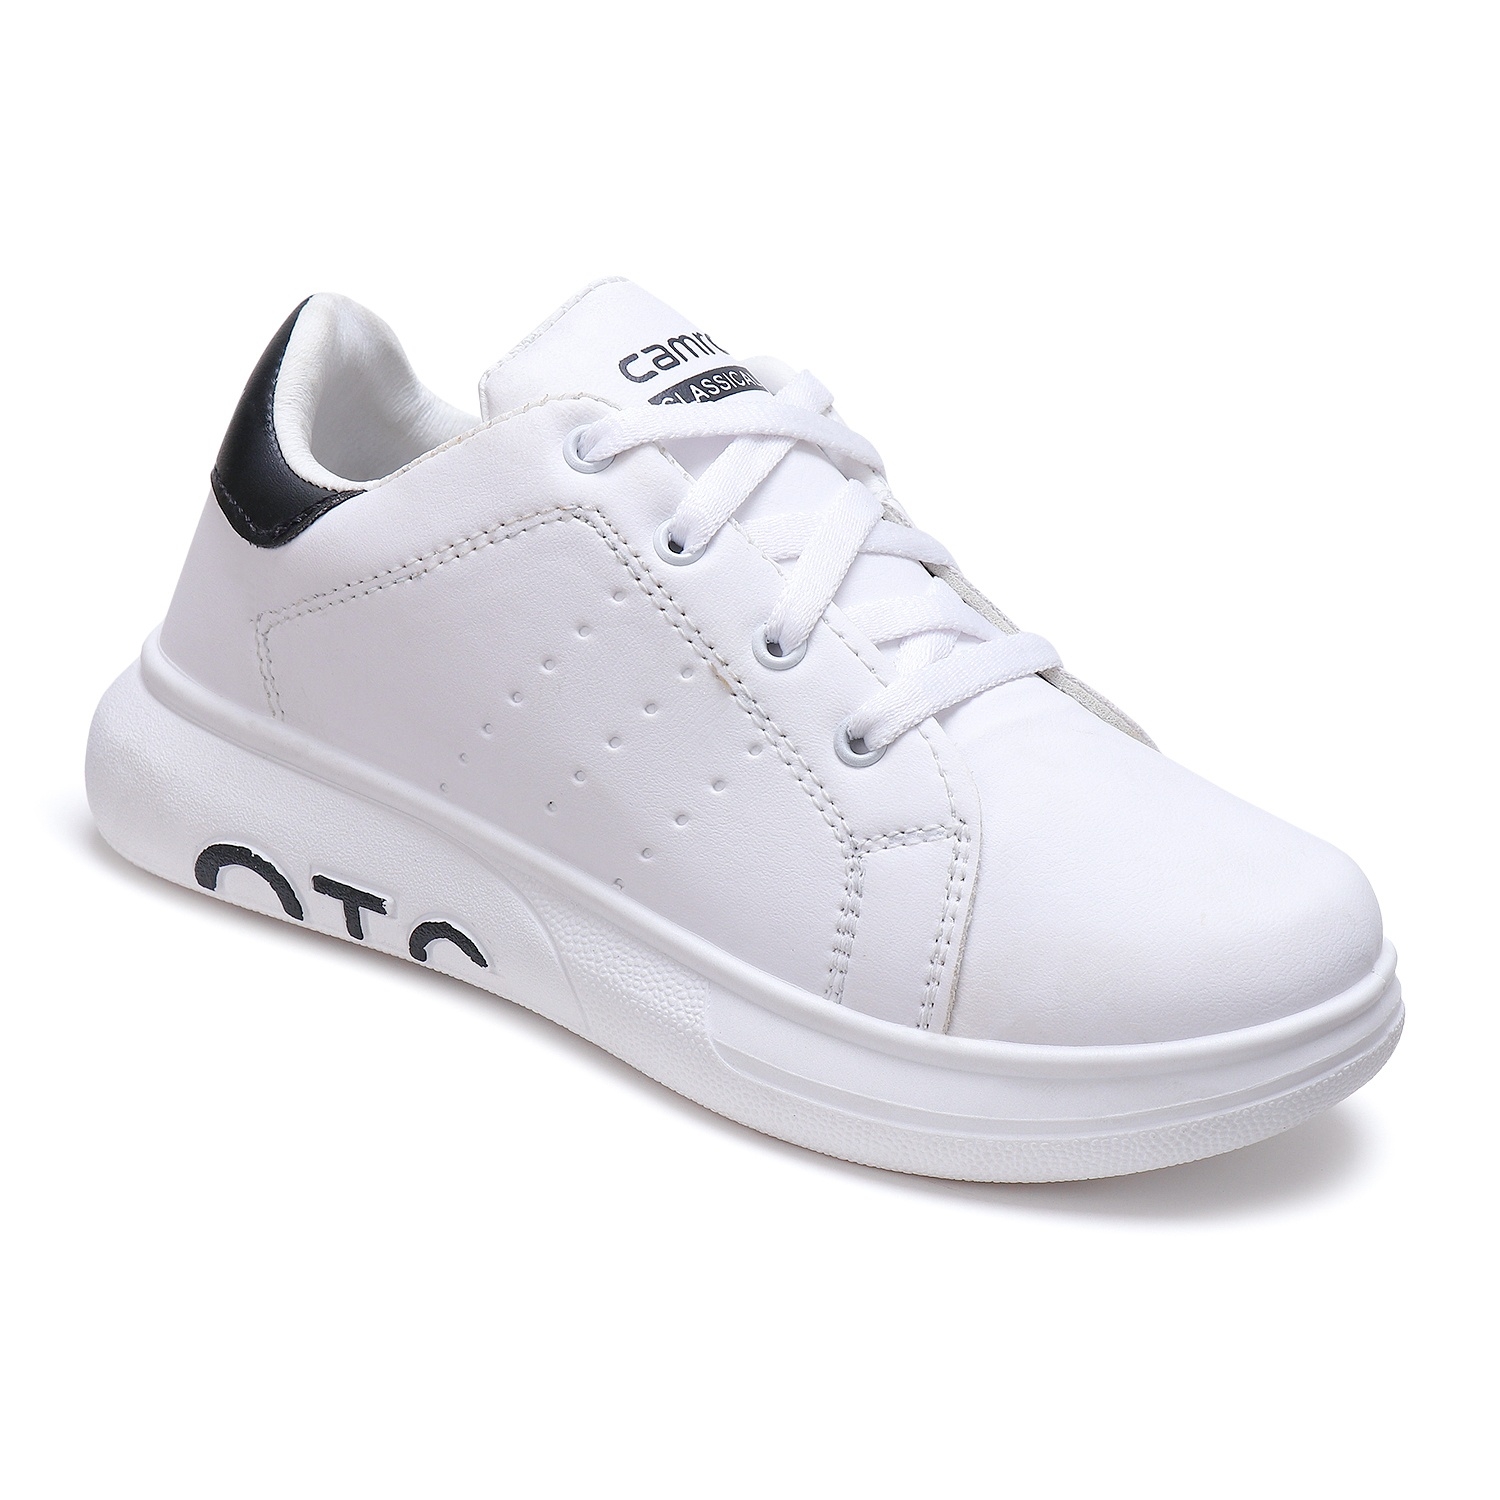 Camro OTC 1 White/Black Boys Running Shoe